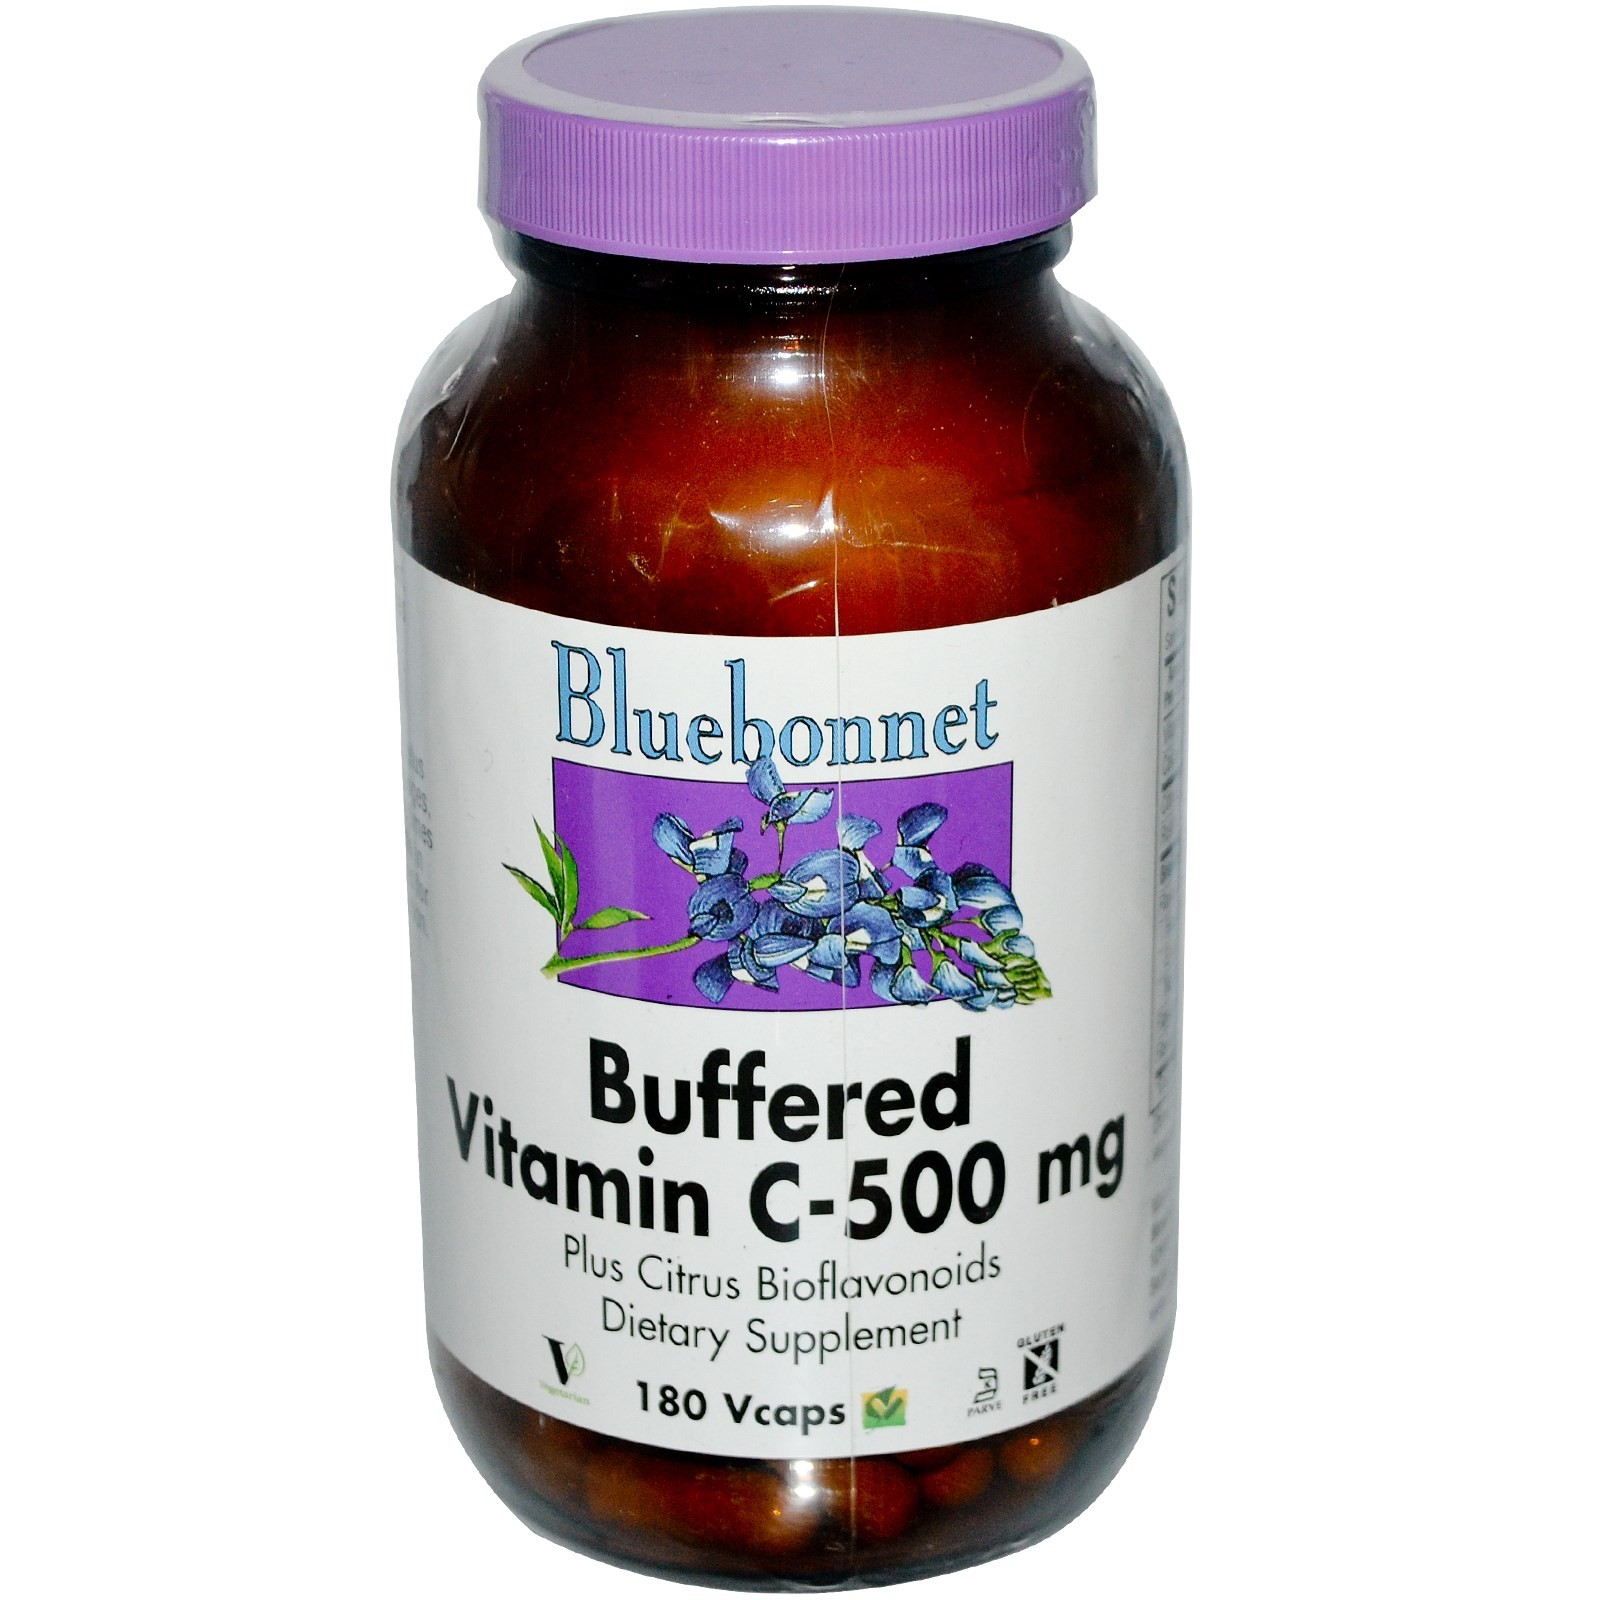 Bluebonnet Buffered Vitamin C Supplement | Buy Best Buffered Vitamin C